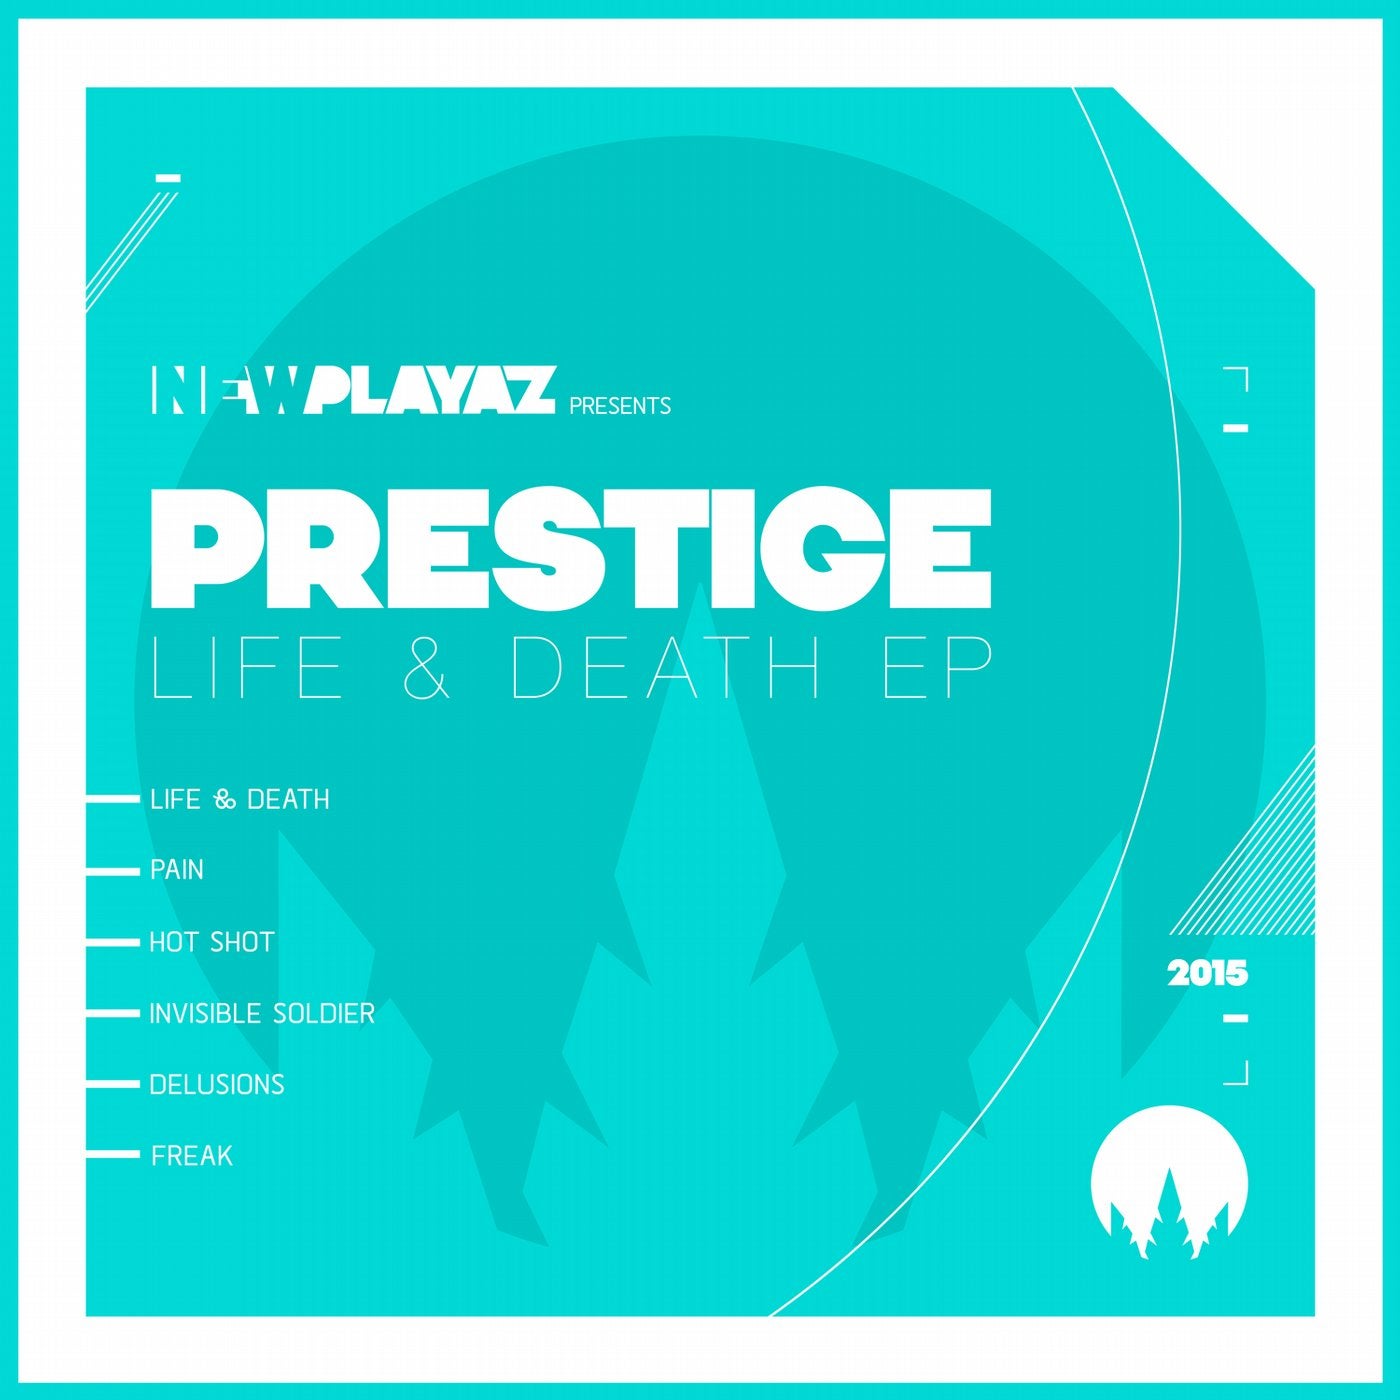 Life & Death EP